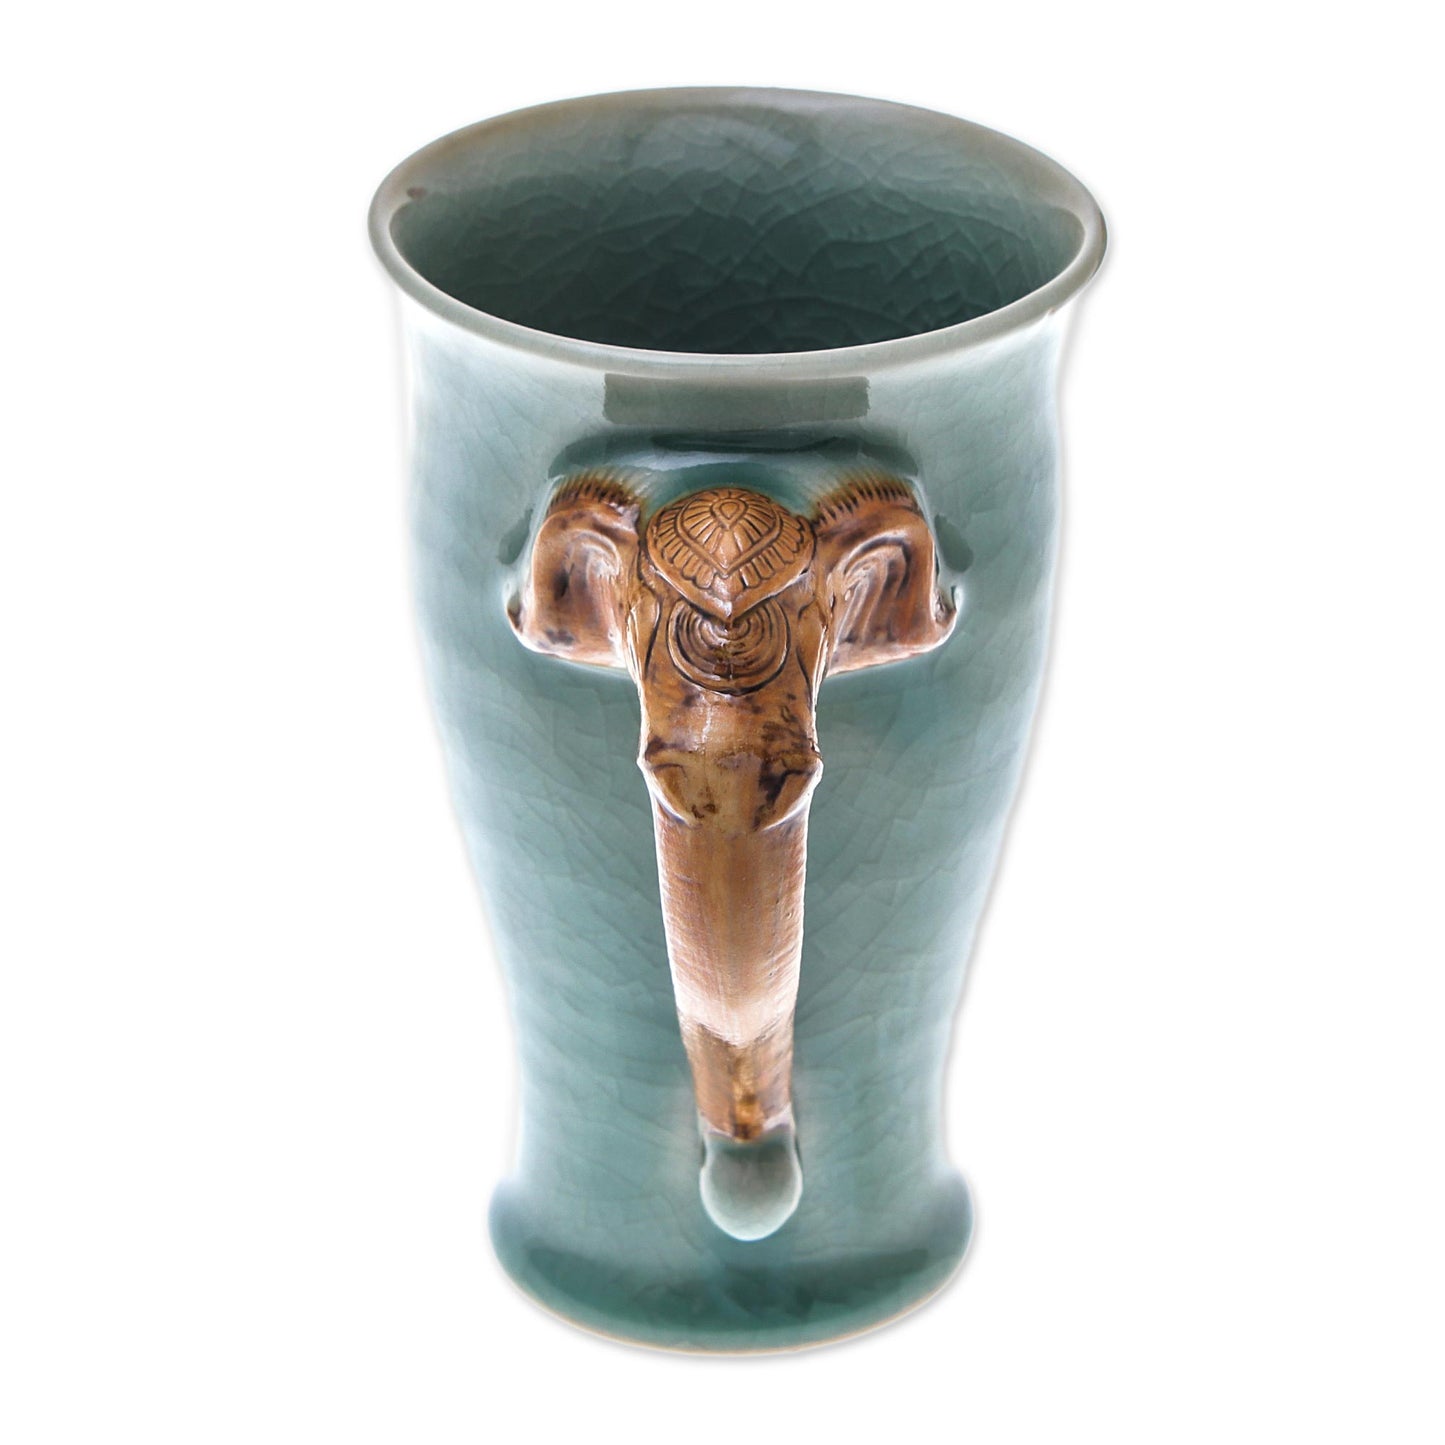 Elephant Handle in Green Elephant-Themed Celadon Ceramic Mug from Thailand